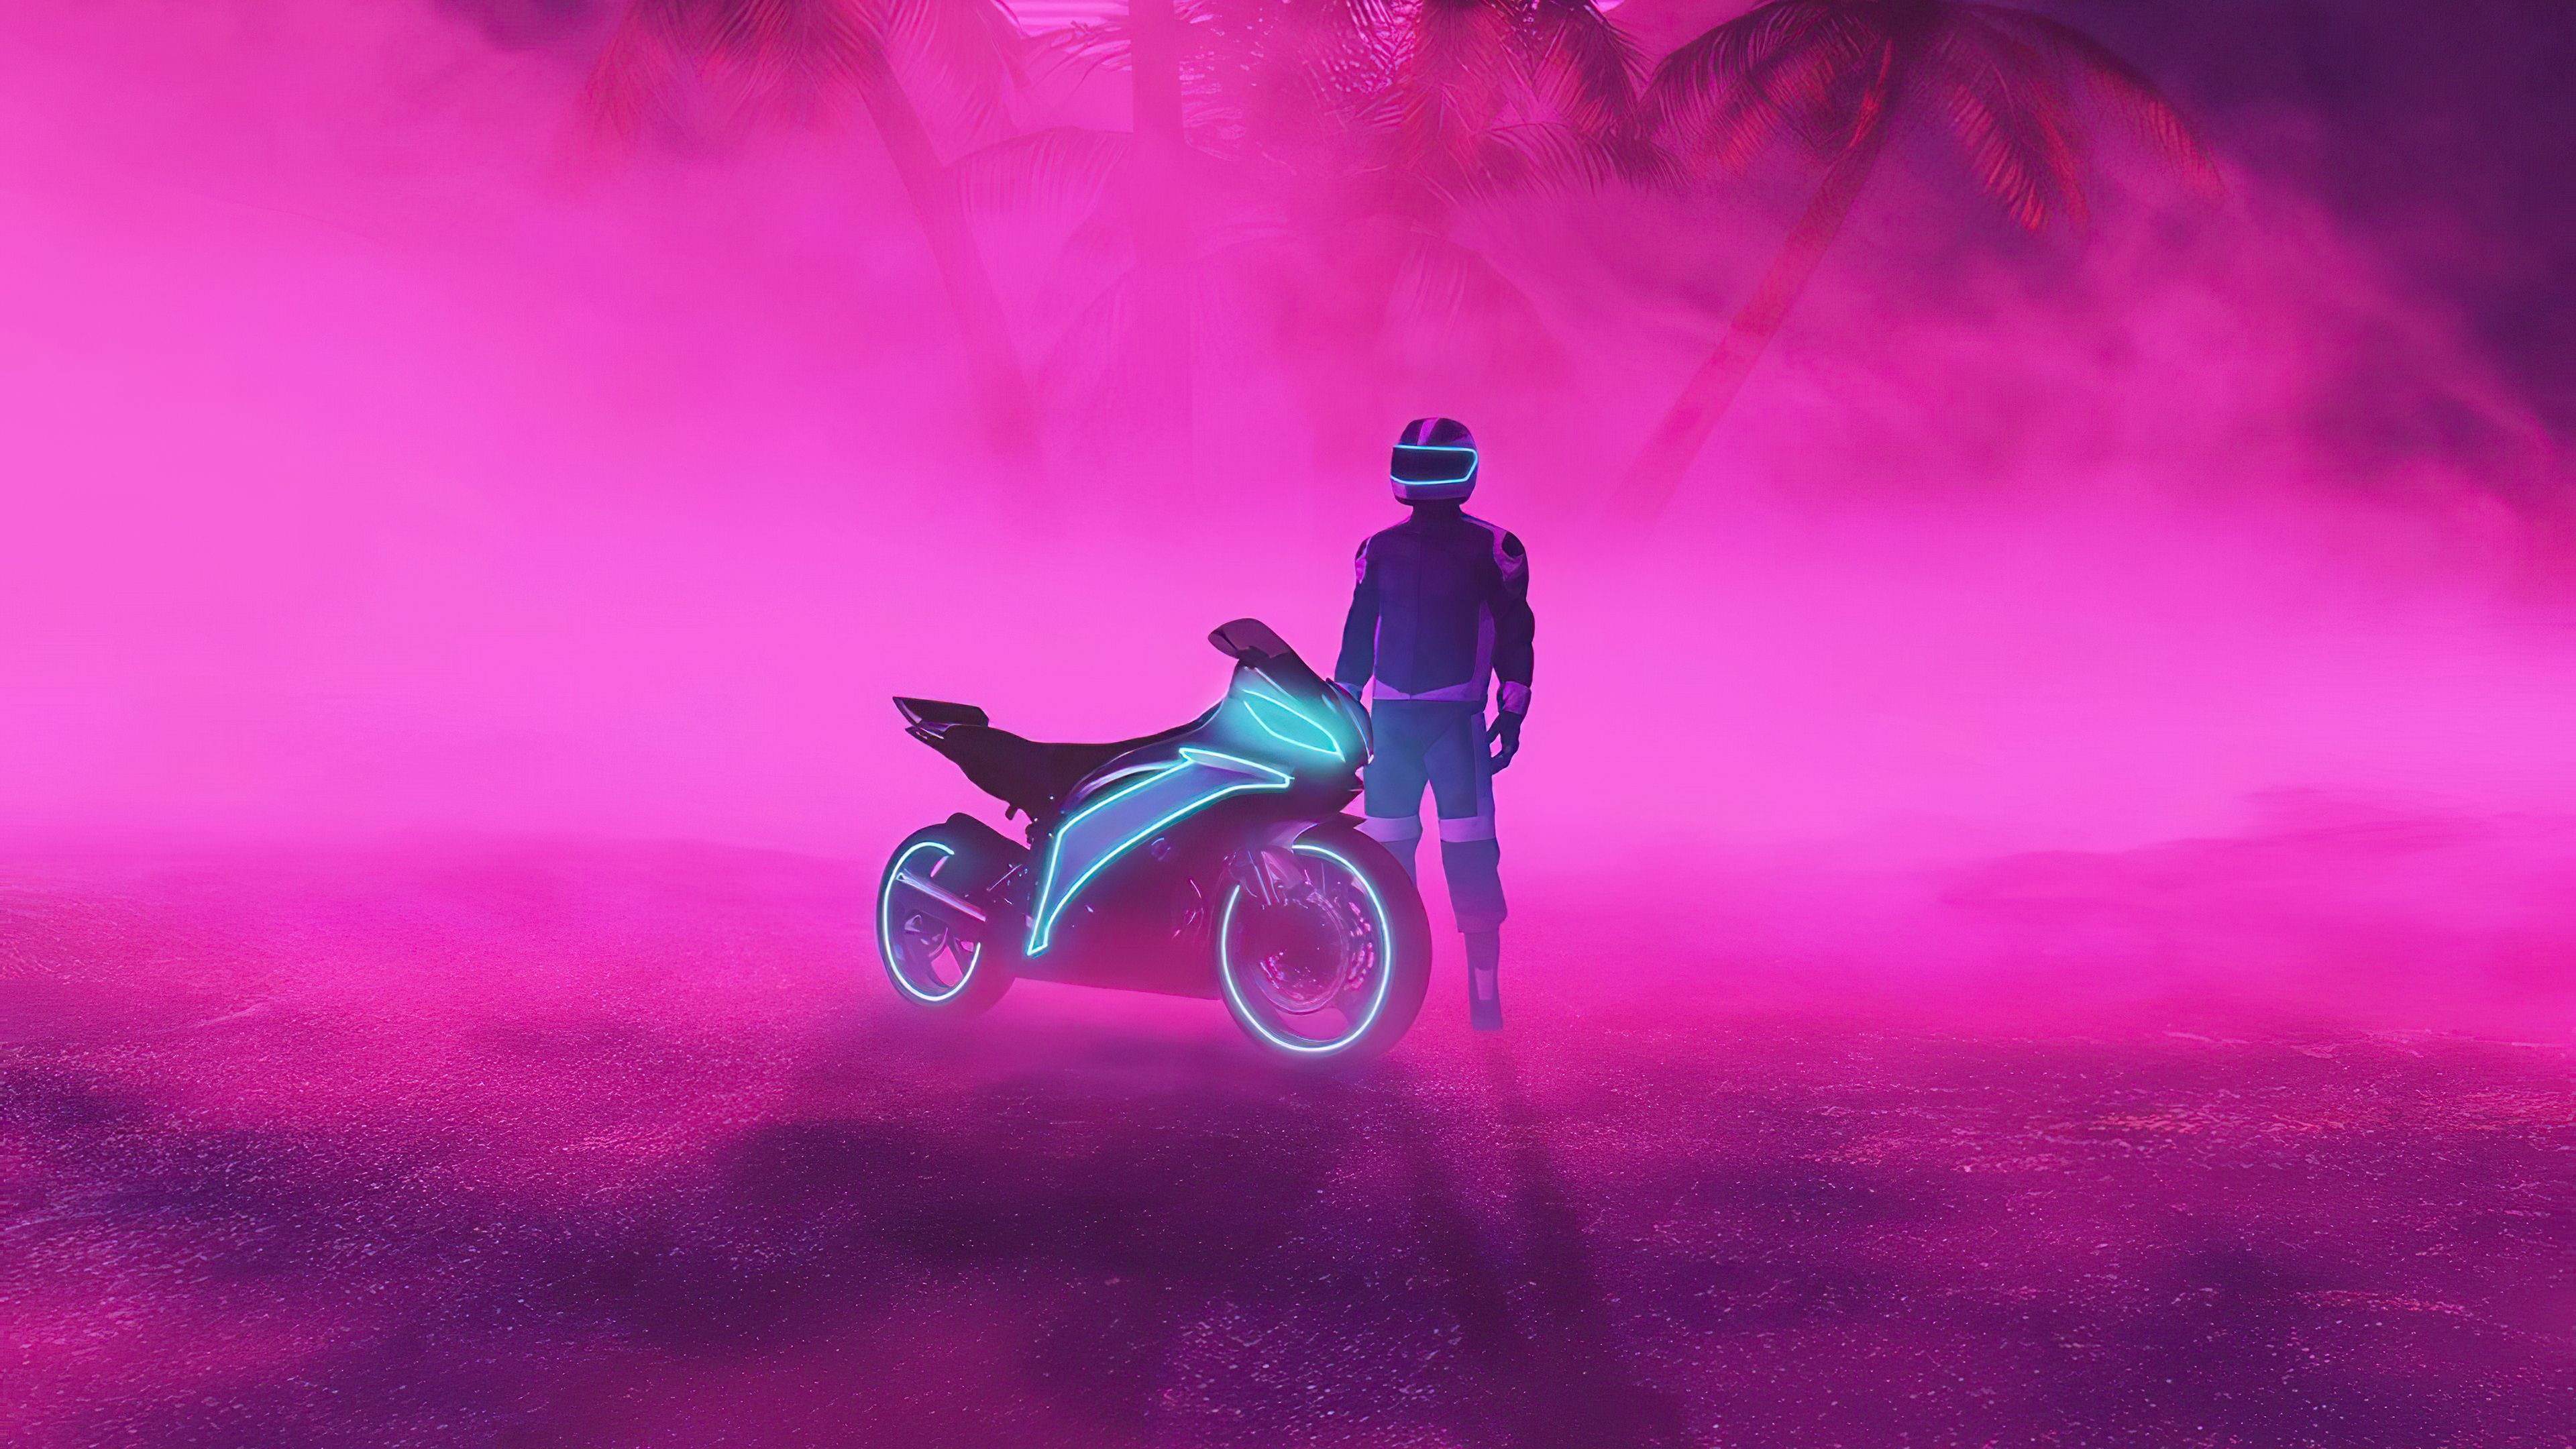 Neon Biker Boy 4k, HD Artist, 4k Wallpaper, Image, Background